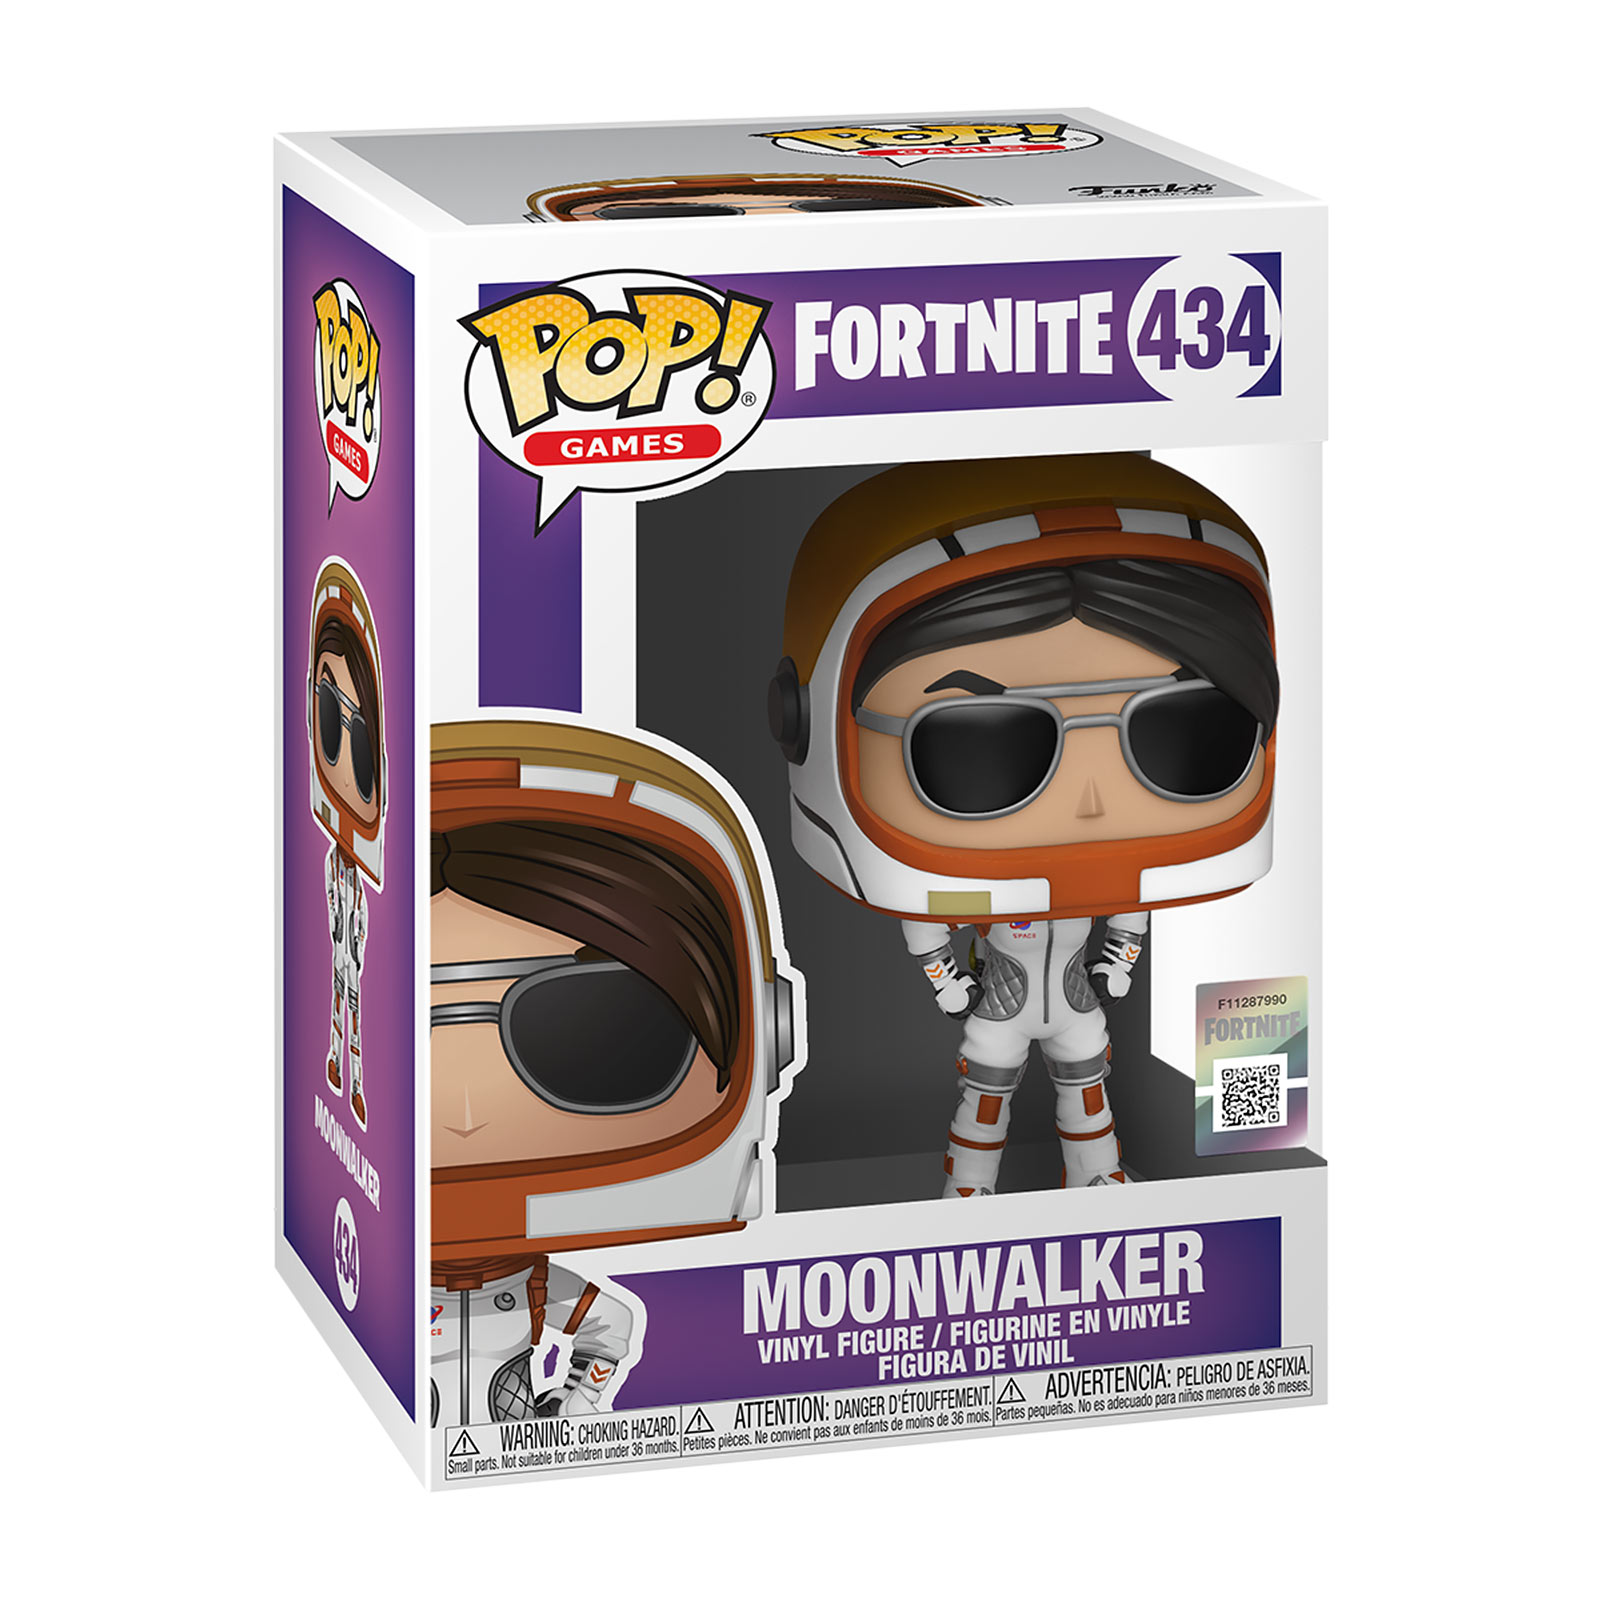 Fortnite - Figurine Moonwalker Funko Pop